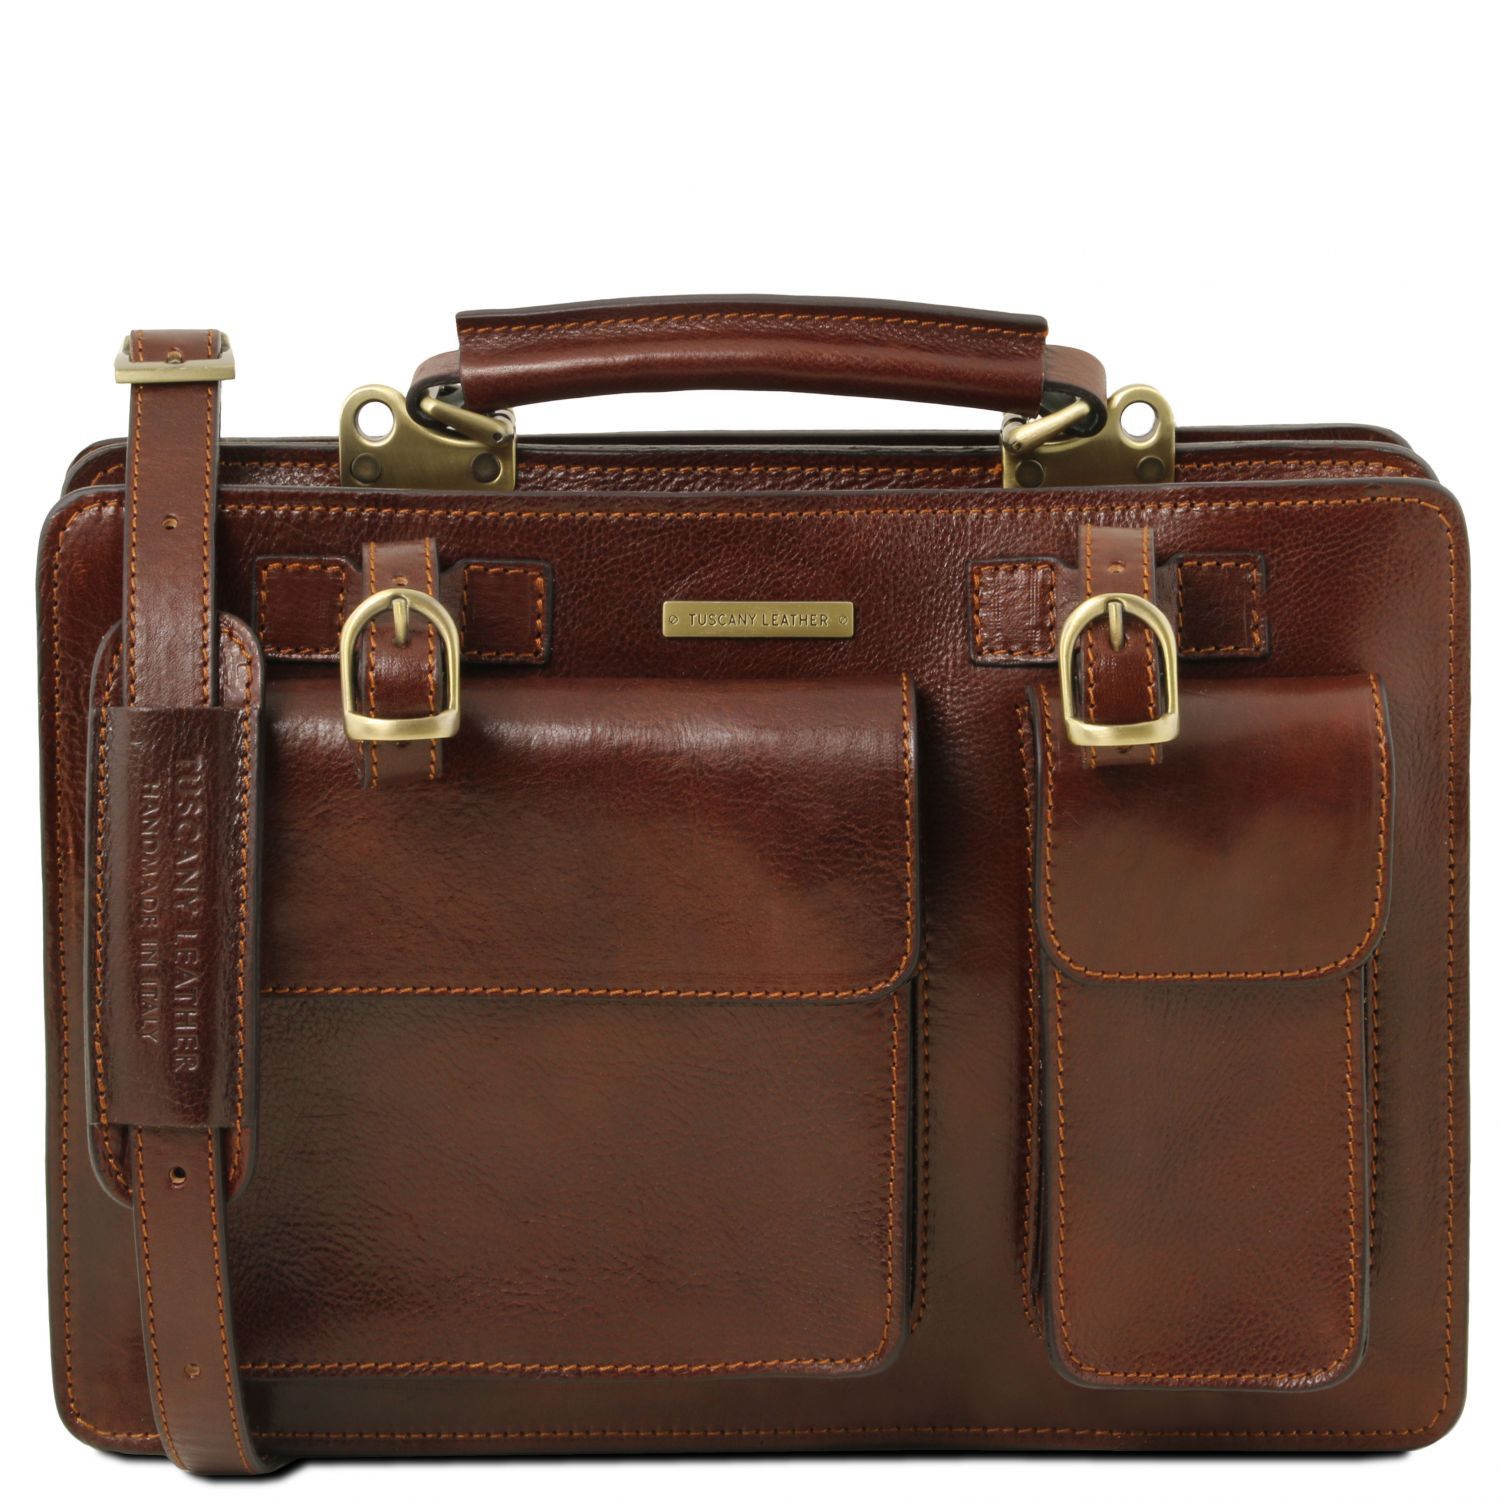 Made in The USA Stars Laptop Messenger Bag Briefcase Notebook Bussiness Handbag